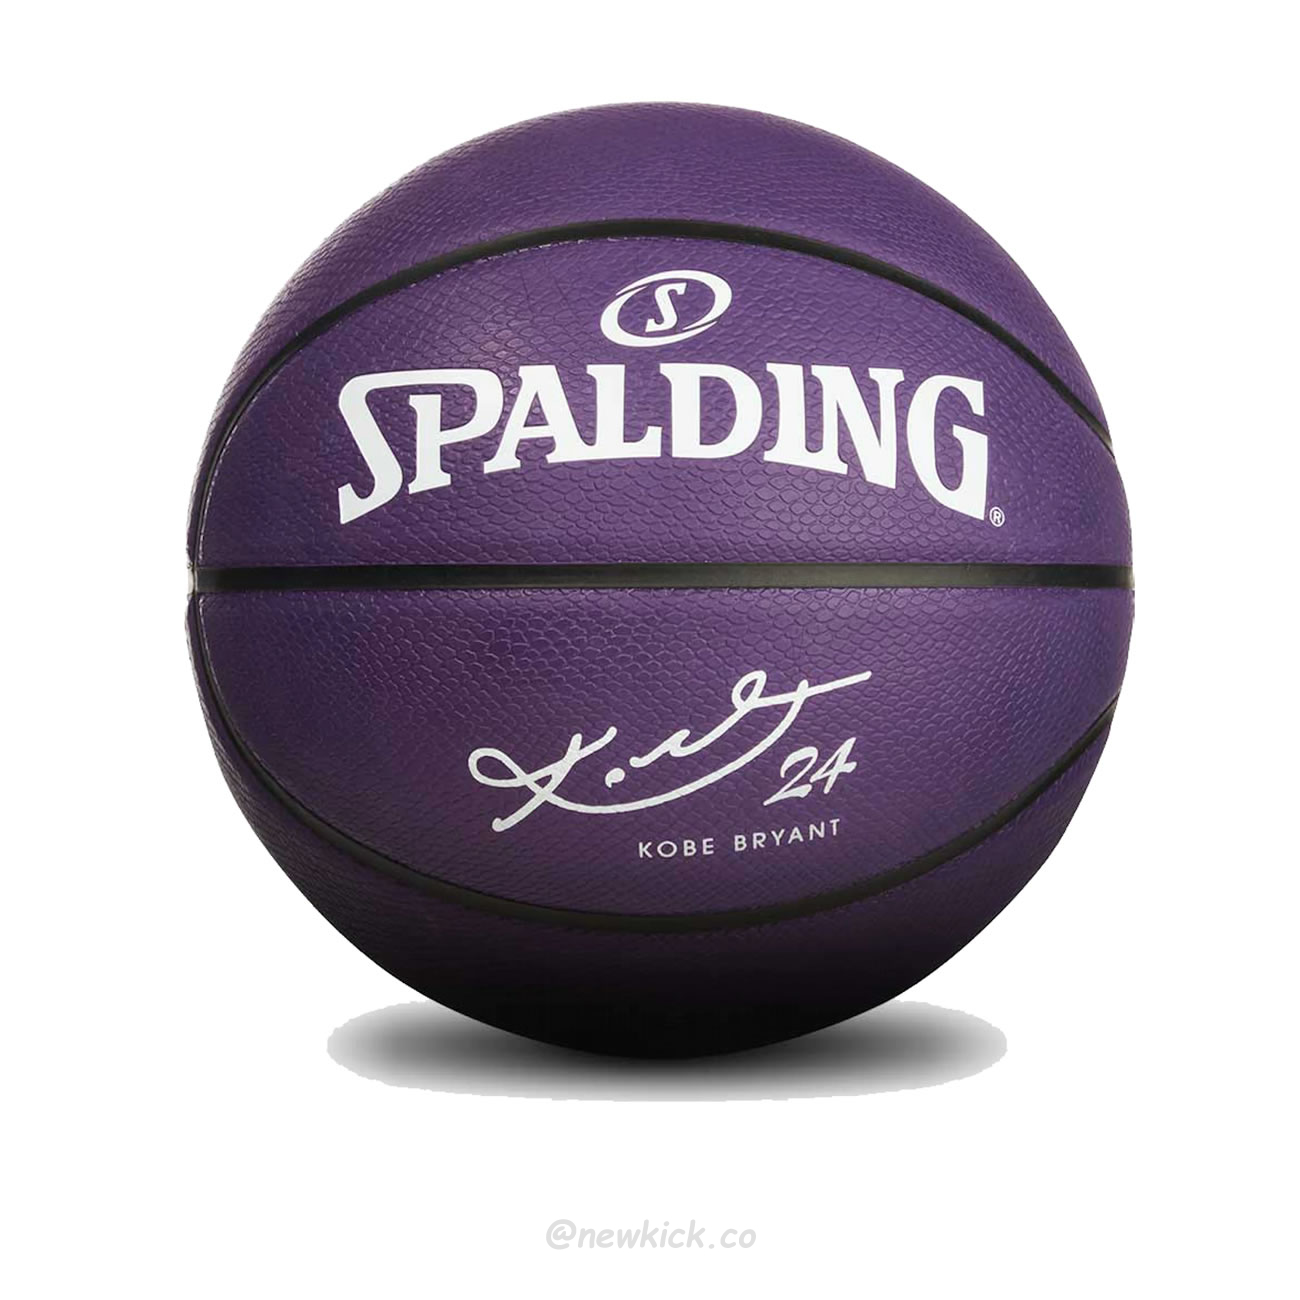 Spalding Kobe Bryant 24k Basketball Black Purple (8) - newkick.org